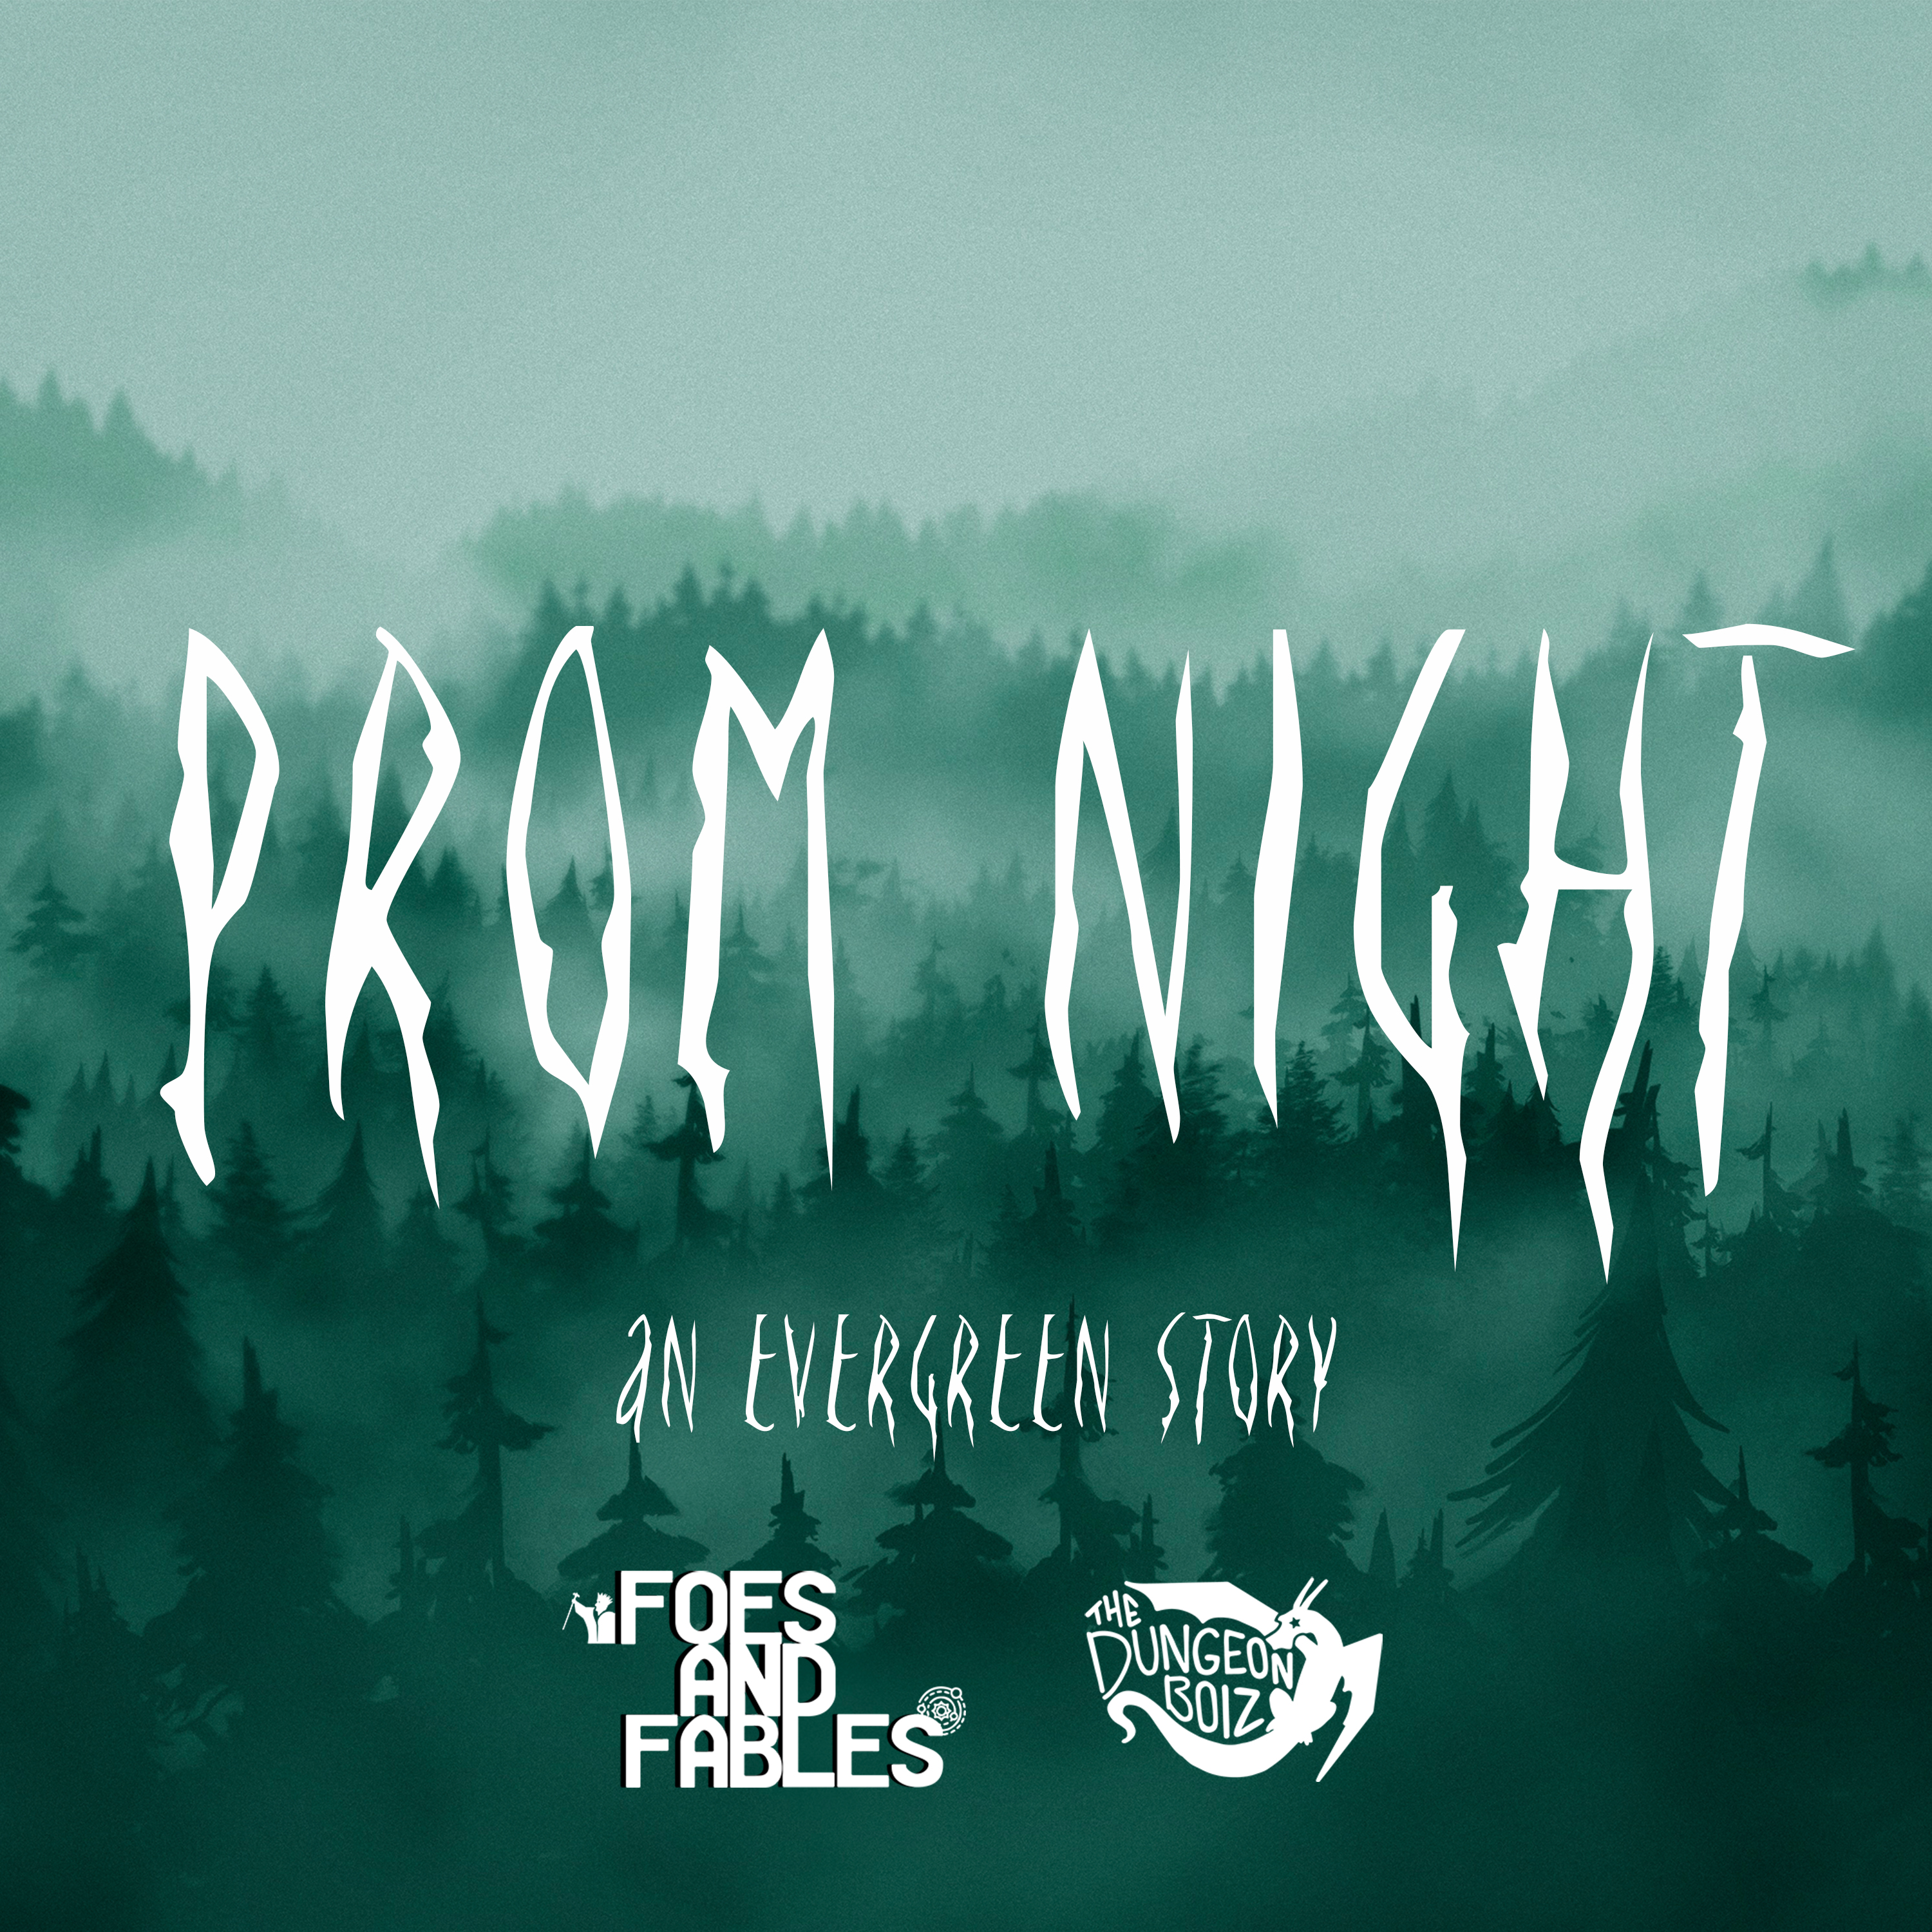 BONUS: Prom Night (featuring The Dungeon Boiz) | Evergreen